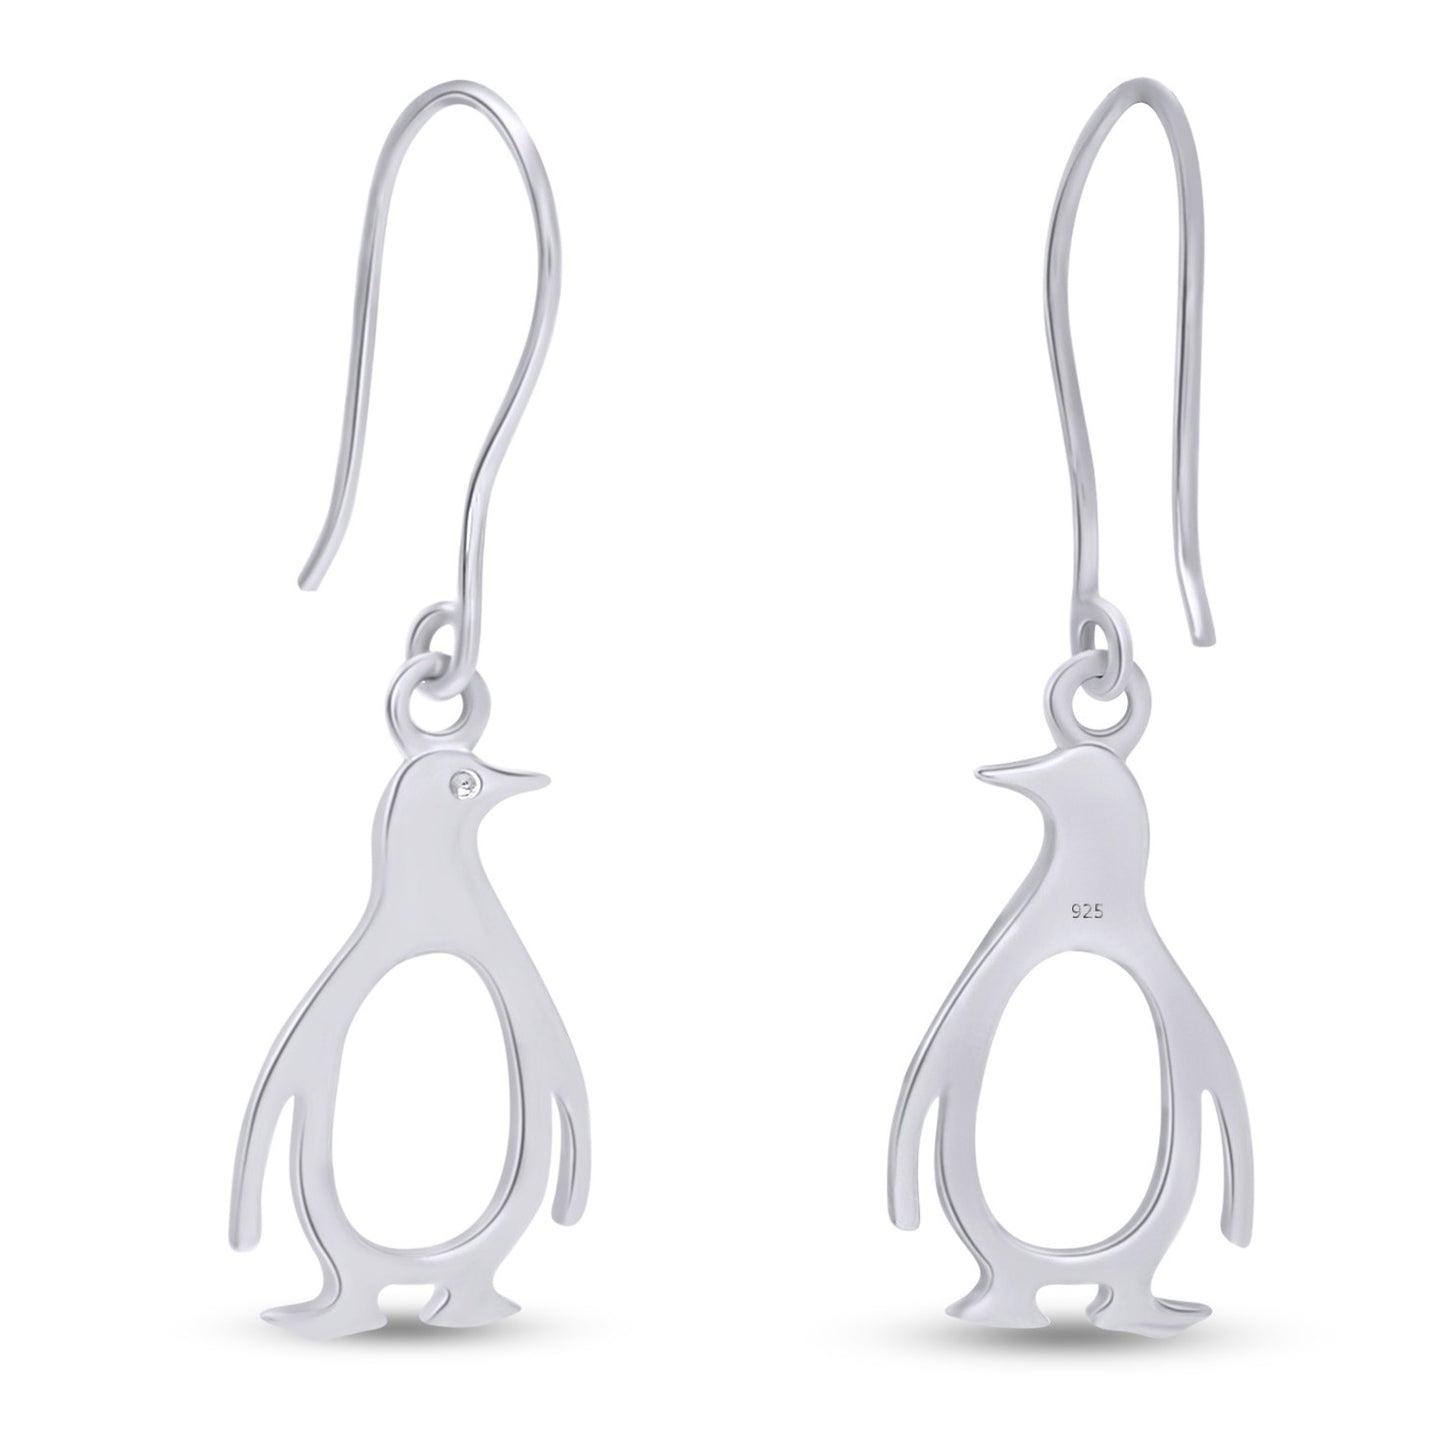 Load image into Gallery viewer, Penguin Hook Earrings Jewelry for Women in 925 Sterling Silver
